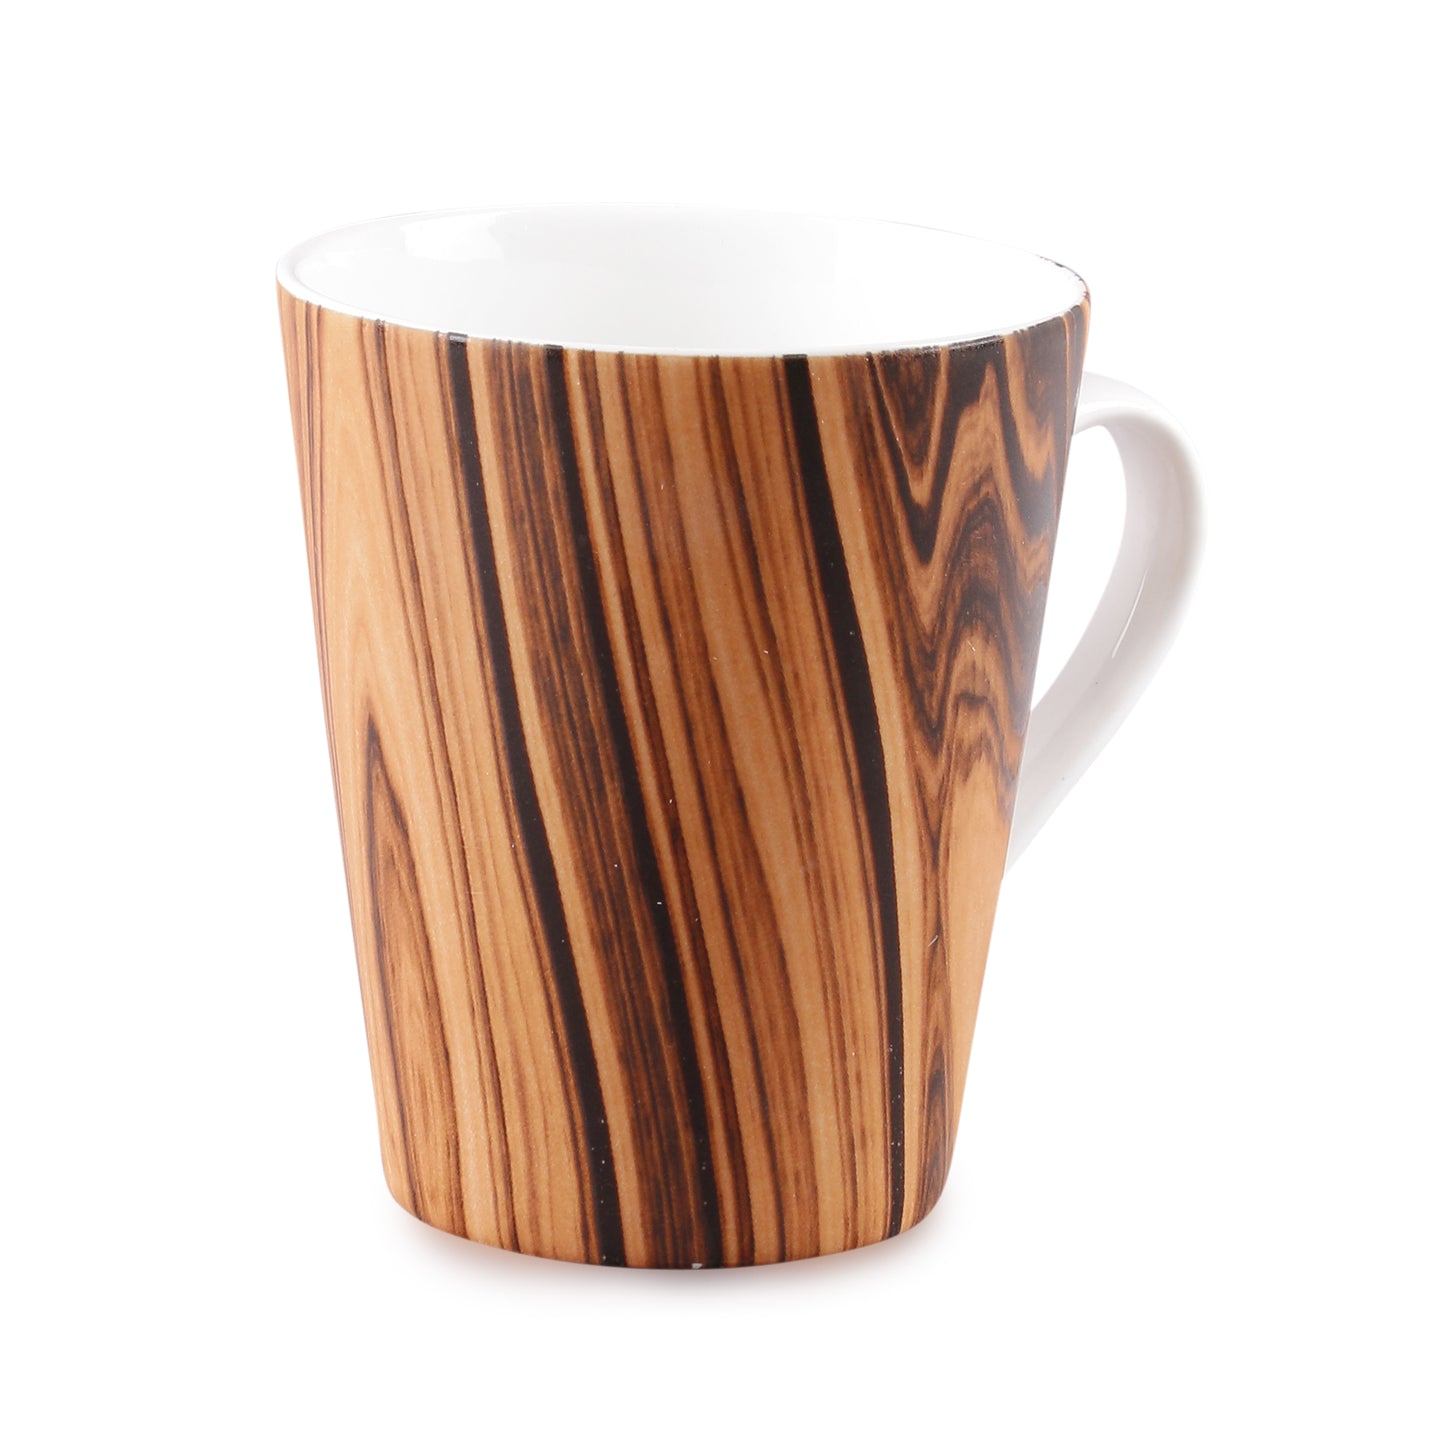 Zing Nature Coffee & Milk Mug, 340ml, 1 Piece (N401)